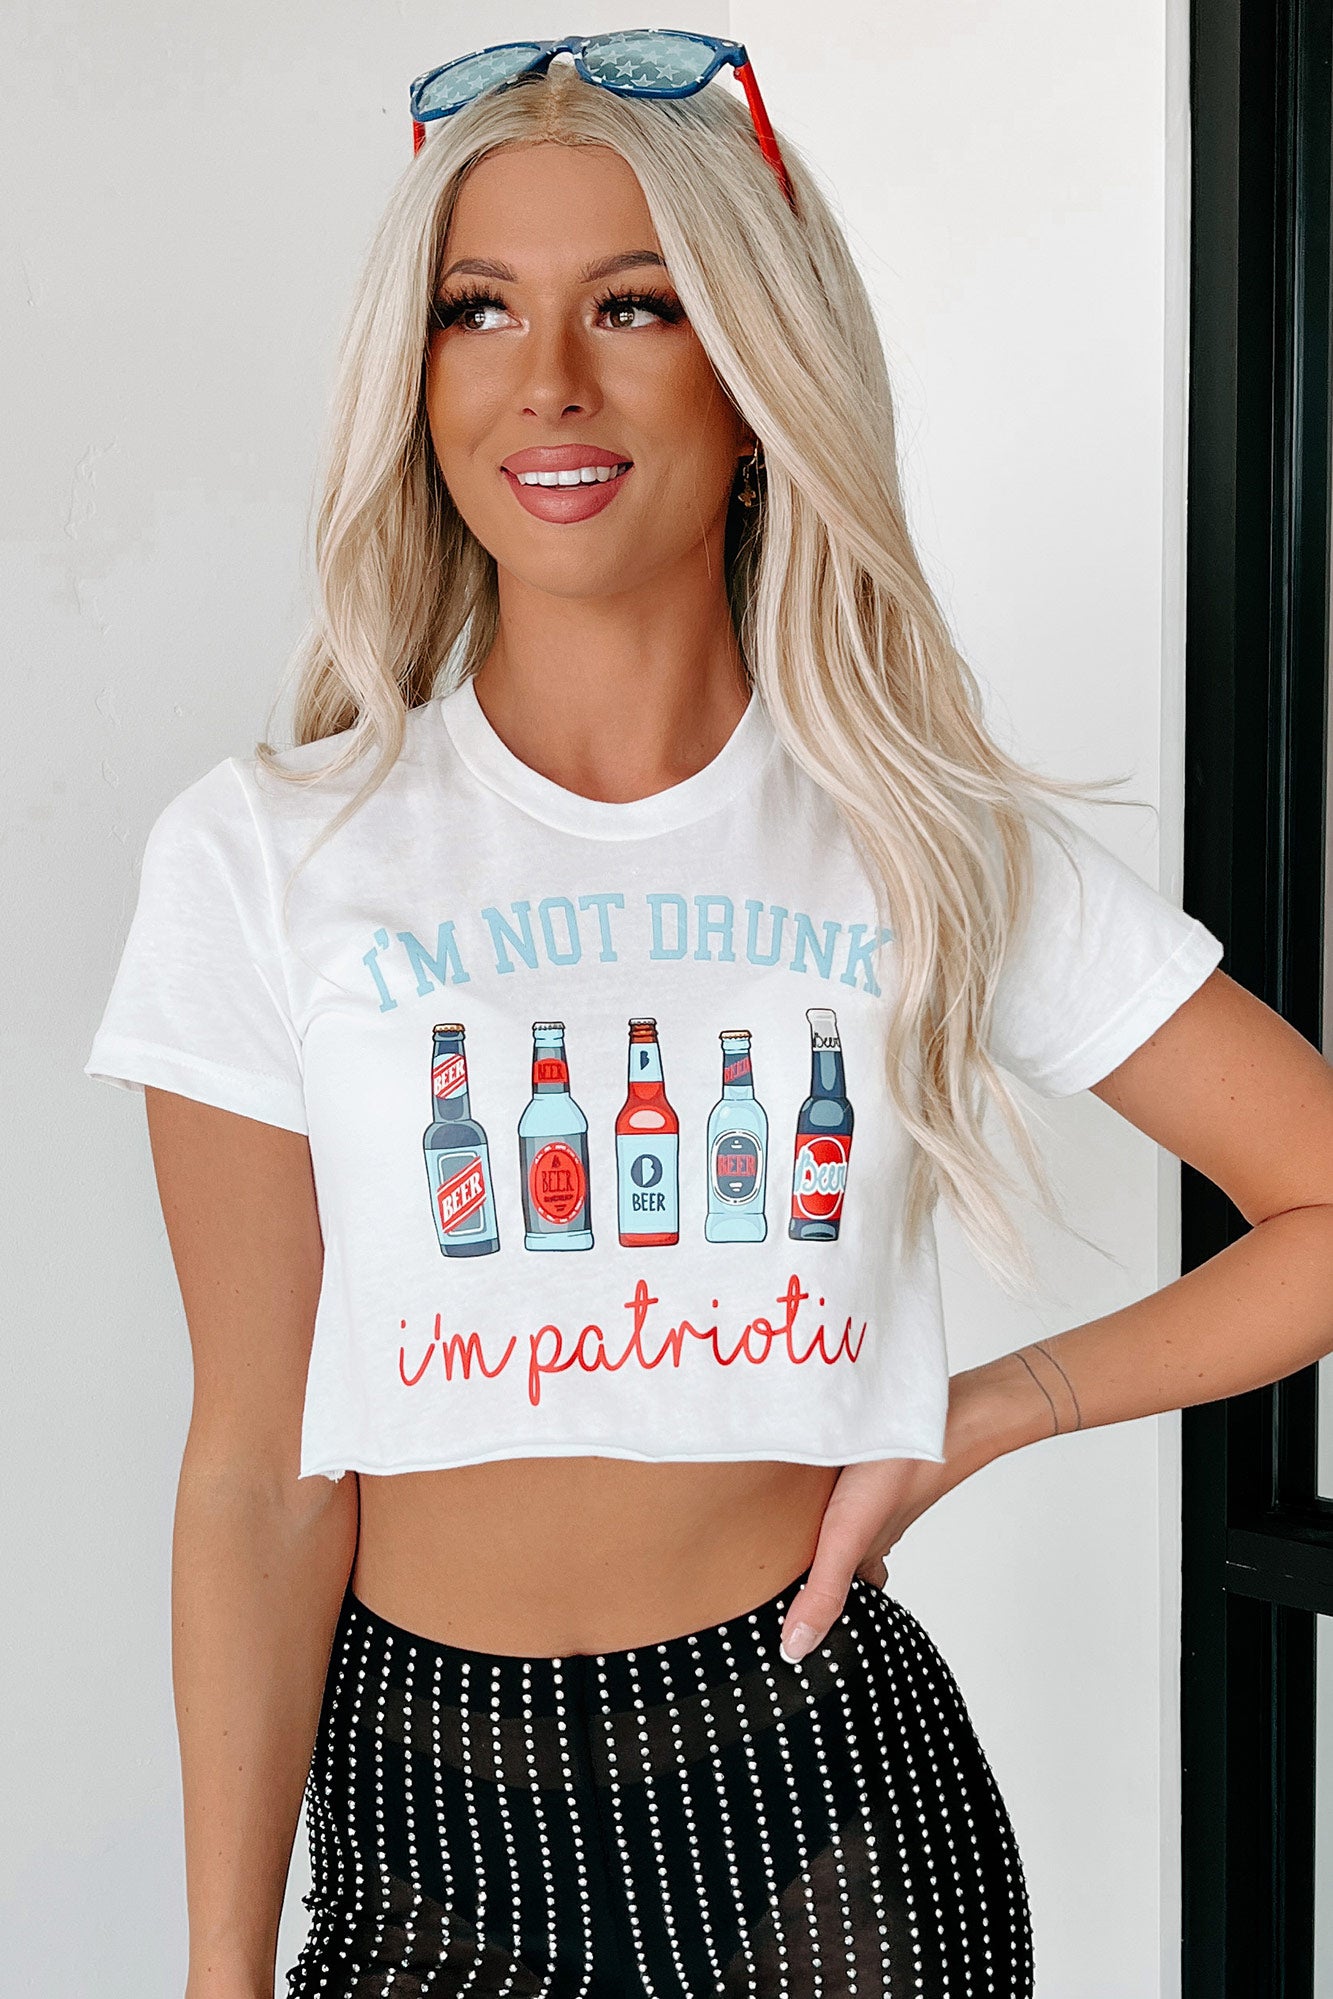 "I'm Not Drunk, I'm Patriotic" Raw Hem Graphic Crop Tee (White) - Print On Demand - NanaMacs